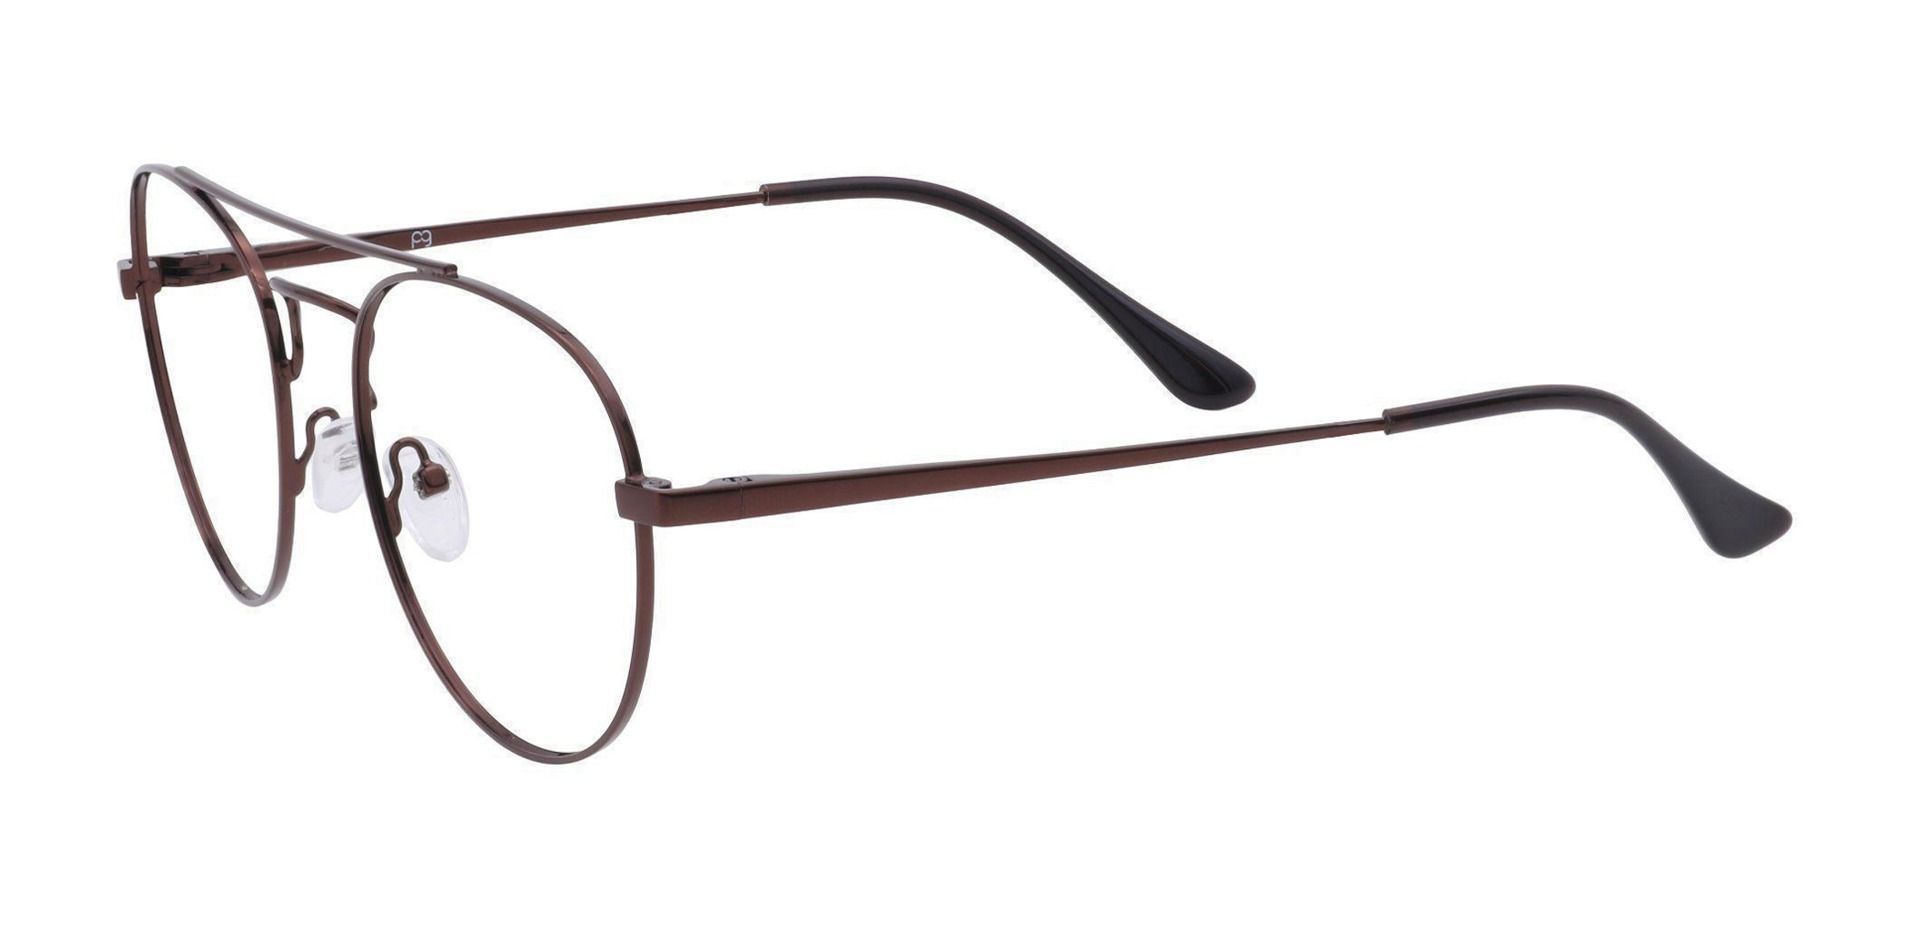 Crawford Aviator Progressive Glasses - Brown